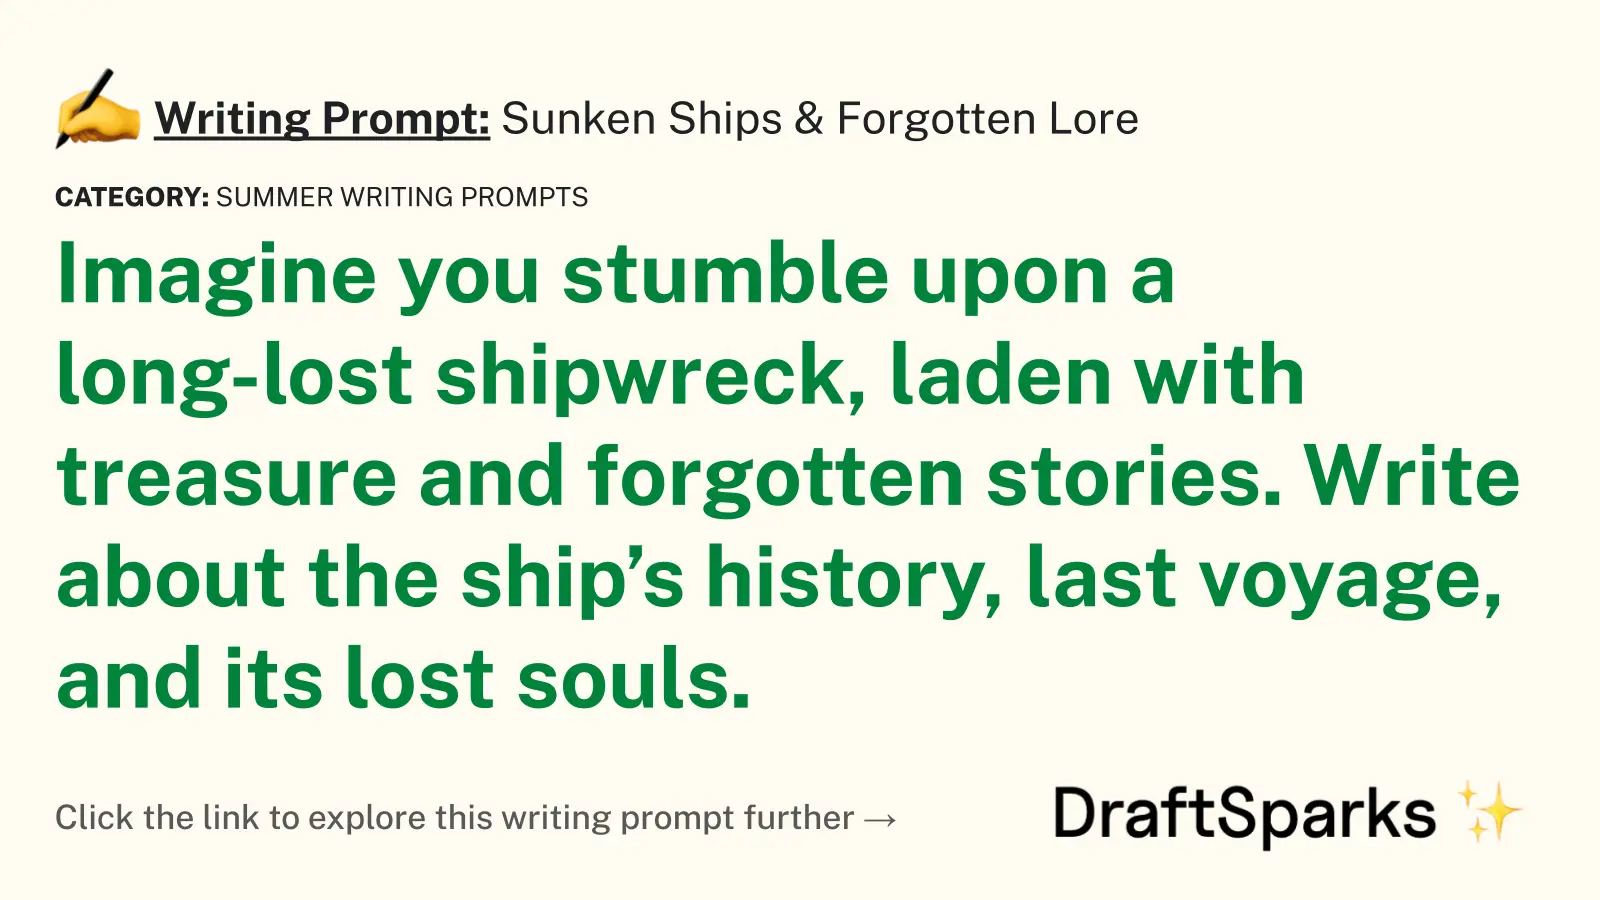 Sunken Ships & Forgotten Lore